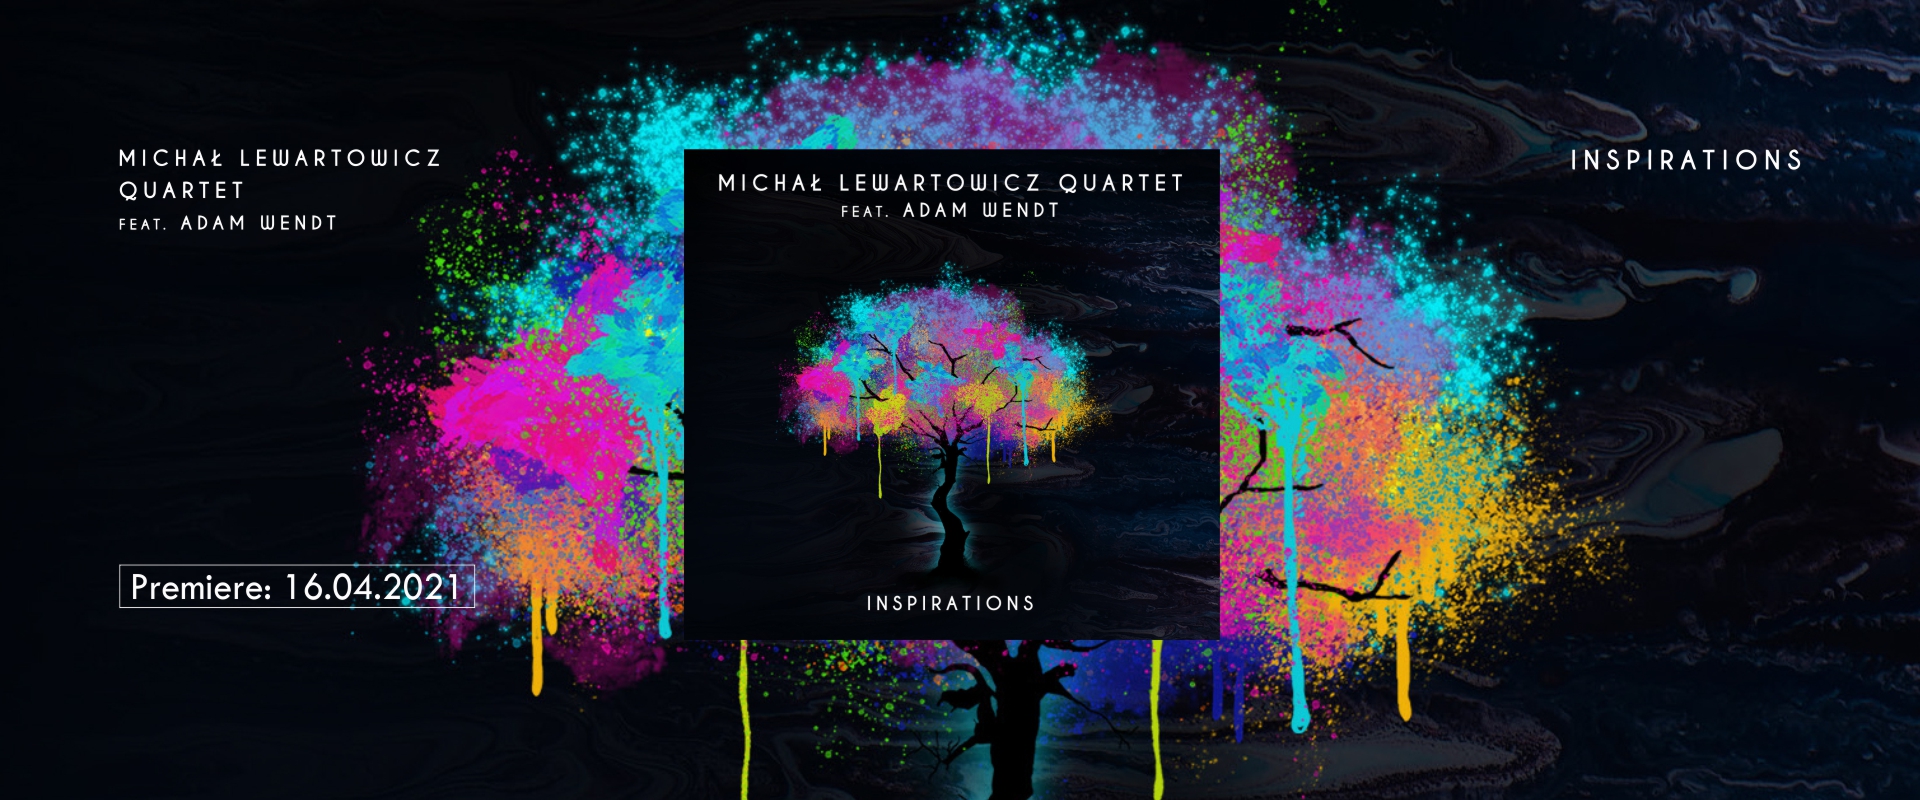 Michał Lewartowicz Quartet - Inspirations baner